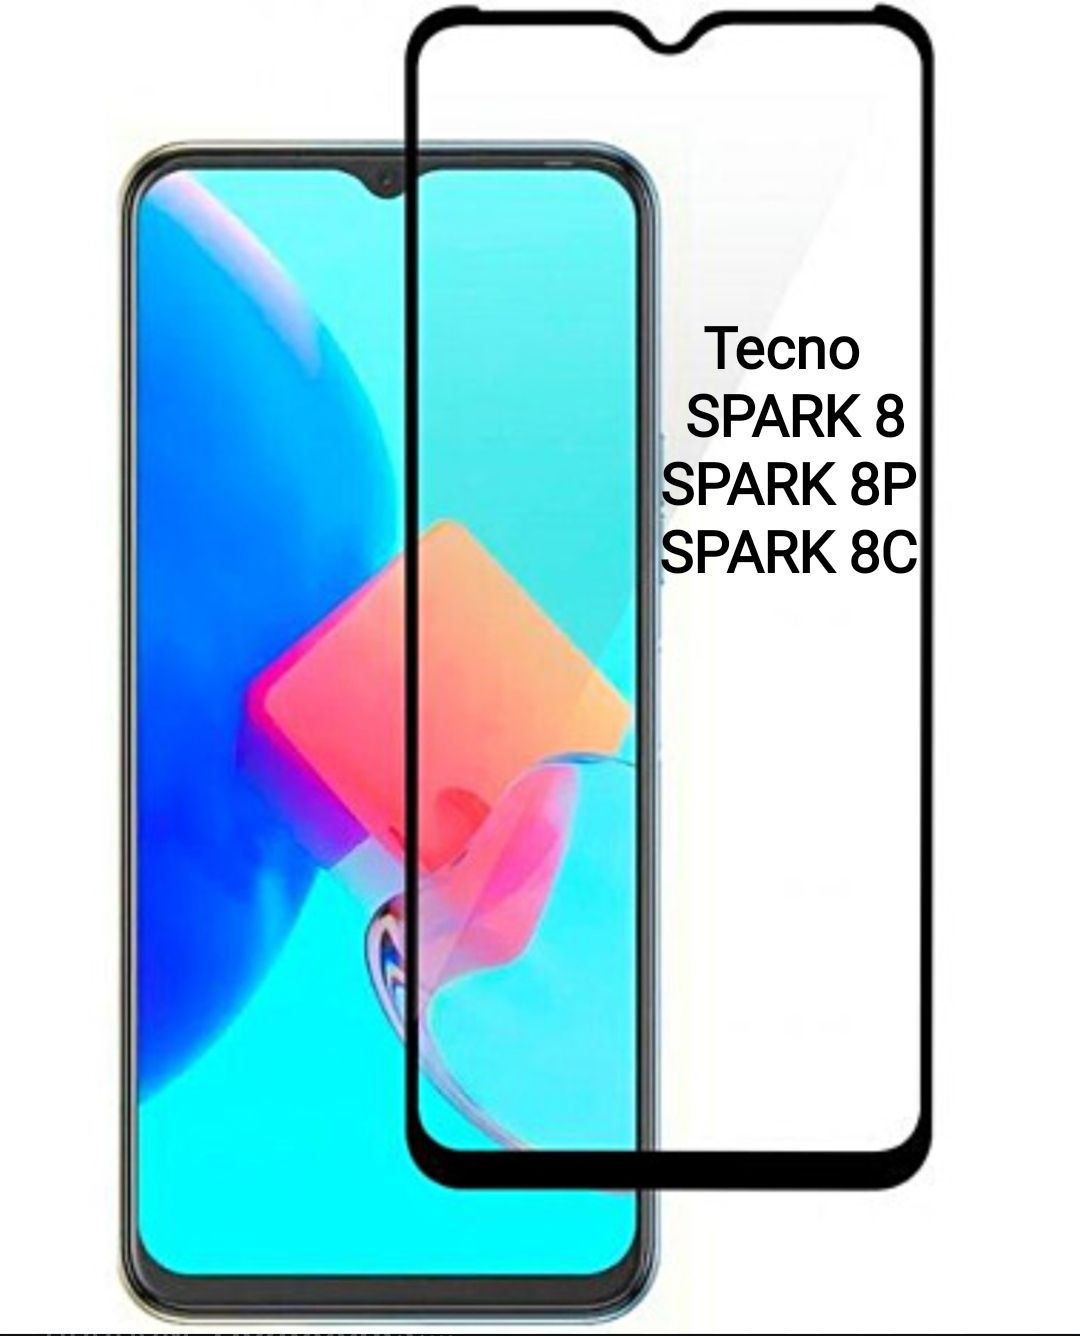 Tecno kg5n spark 8c. Techno mobile Limited Tecno kg5n. Techno kg5n.